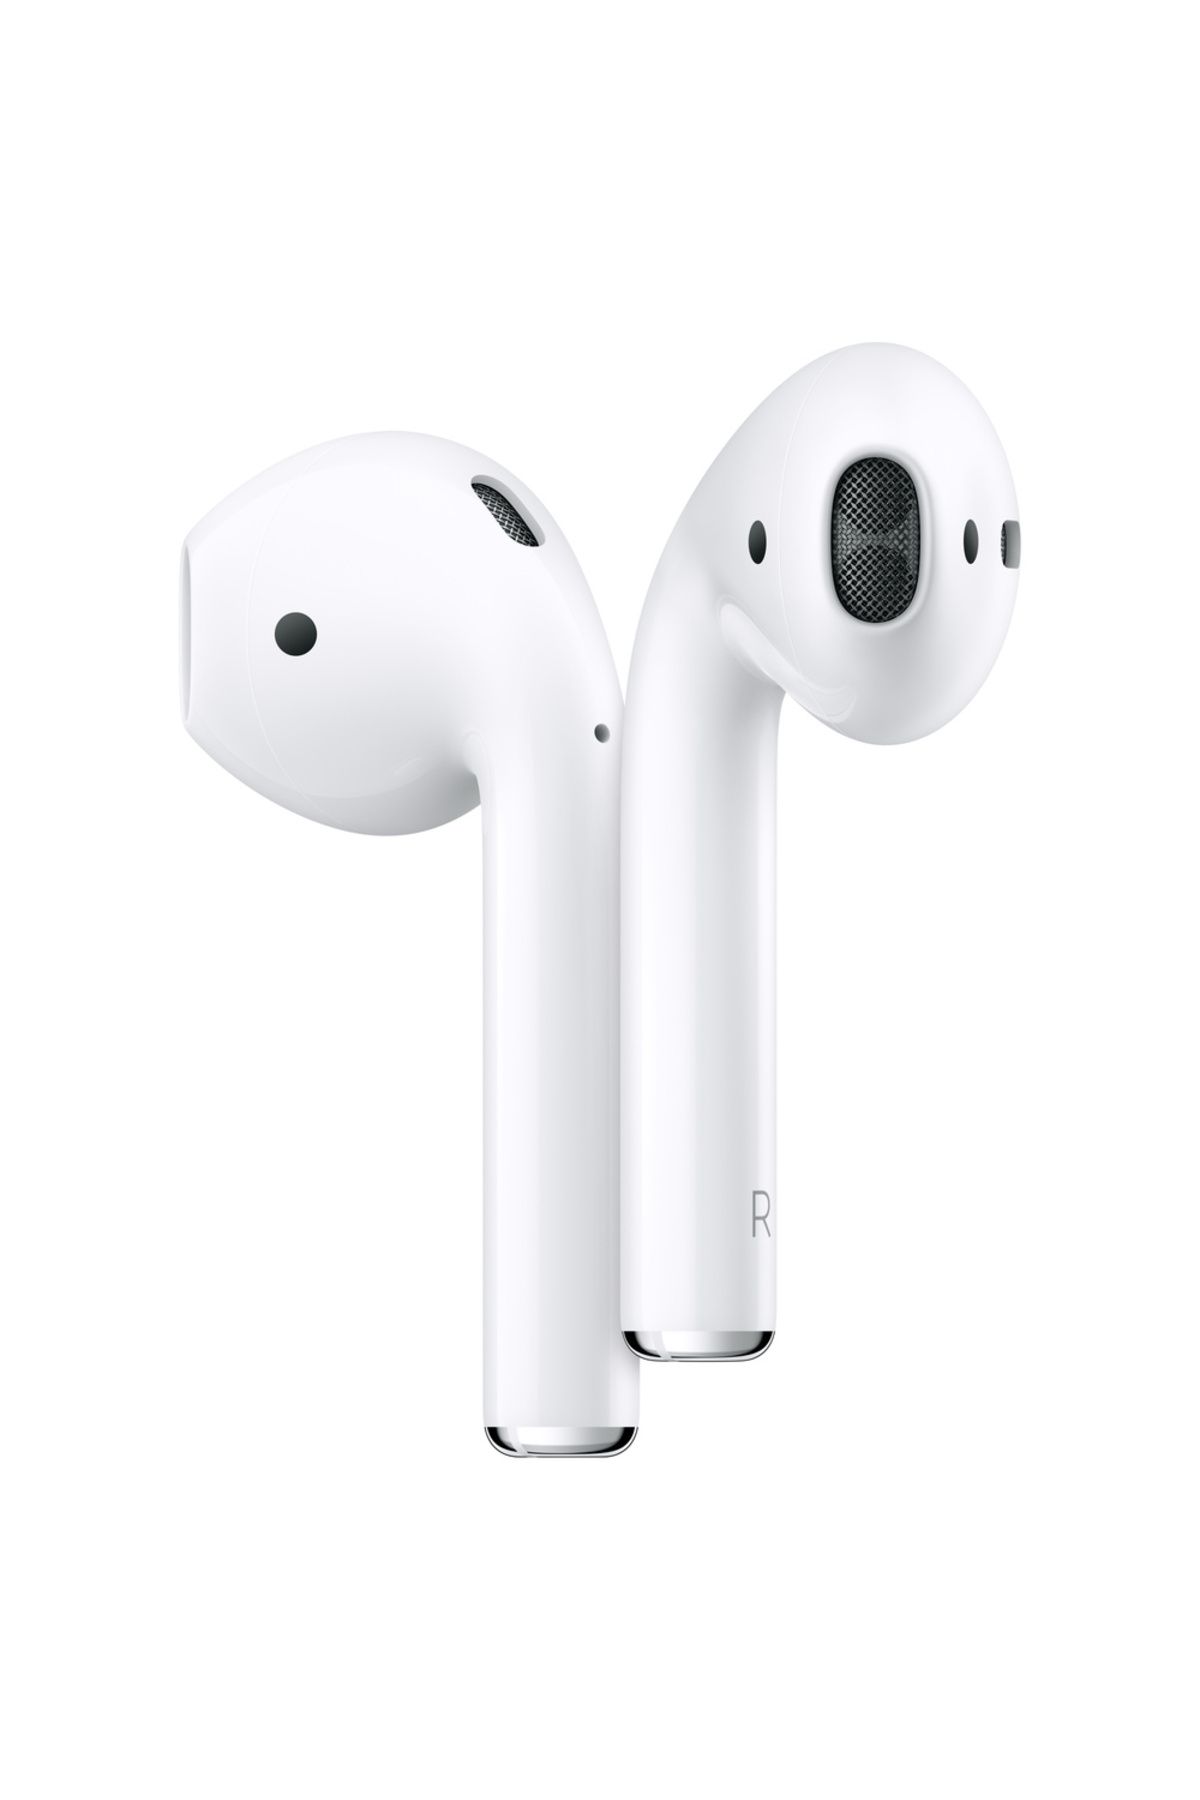 Torima İ18 Pro Tüm Telefonlarla Uyumlu Bluetooth Kulaklık Beyaz